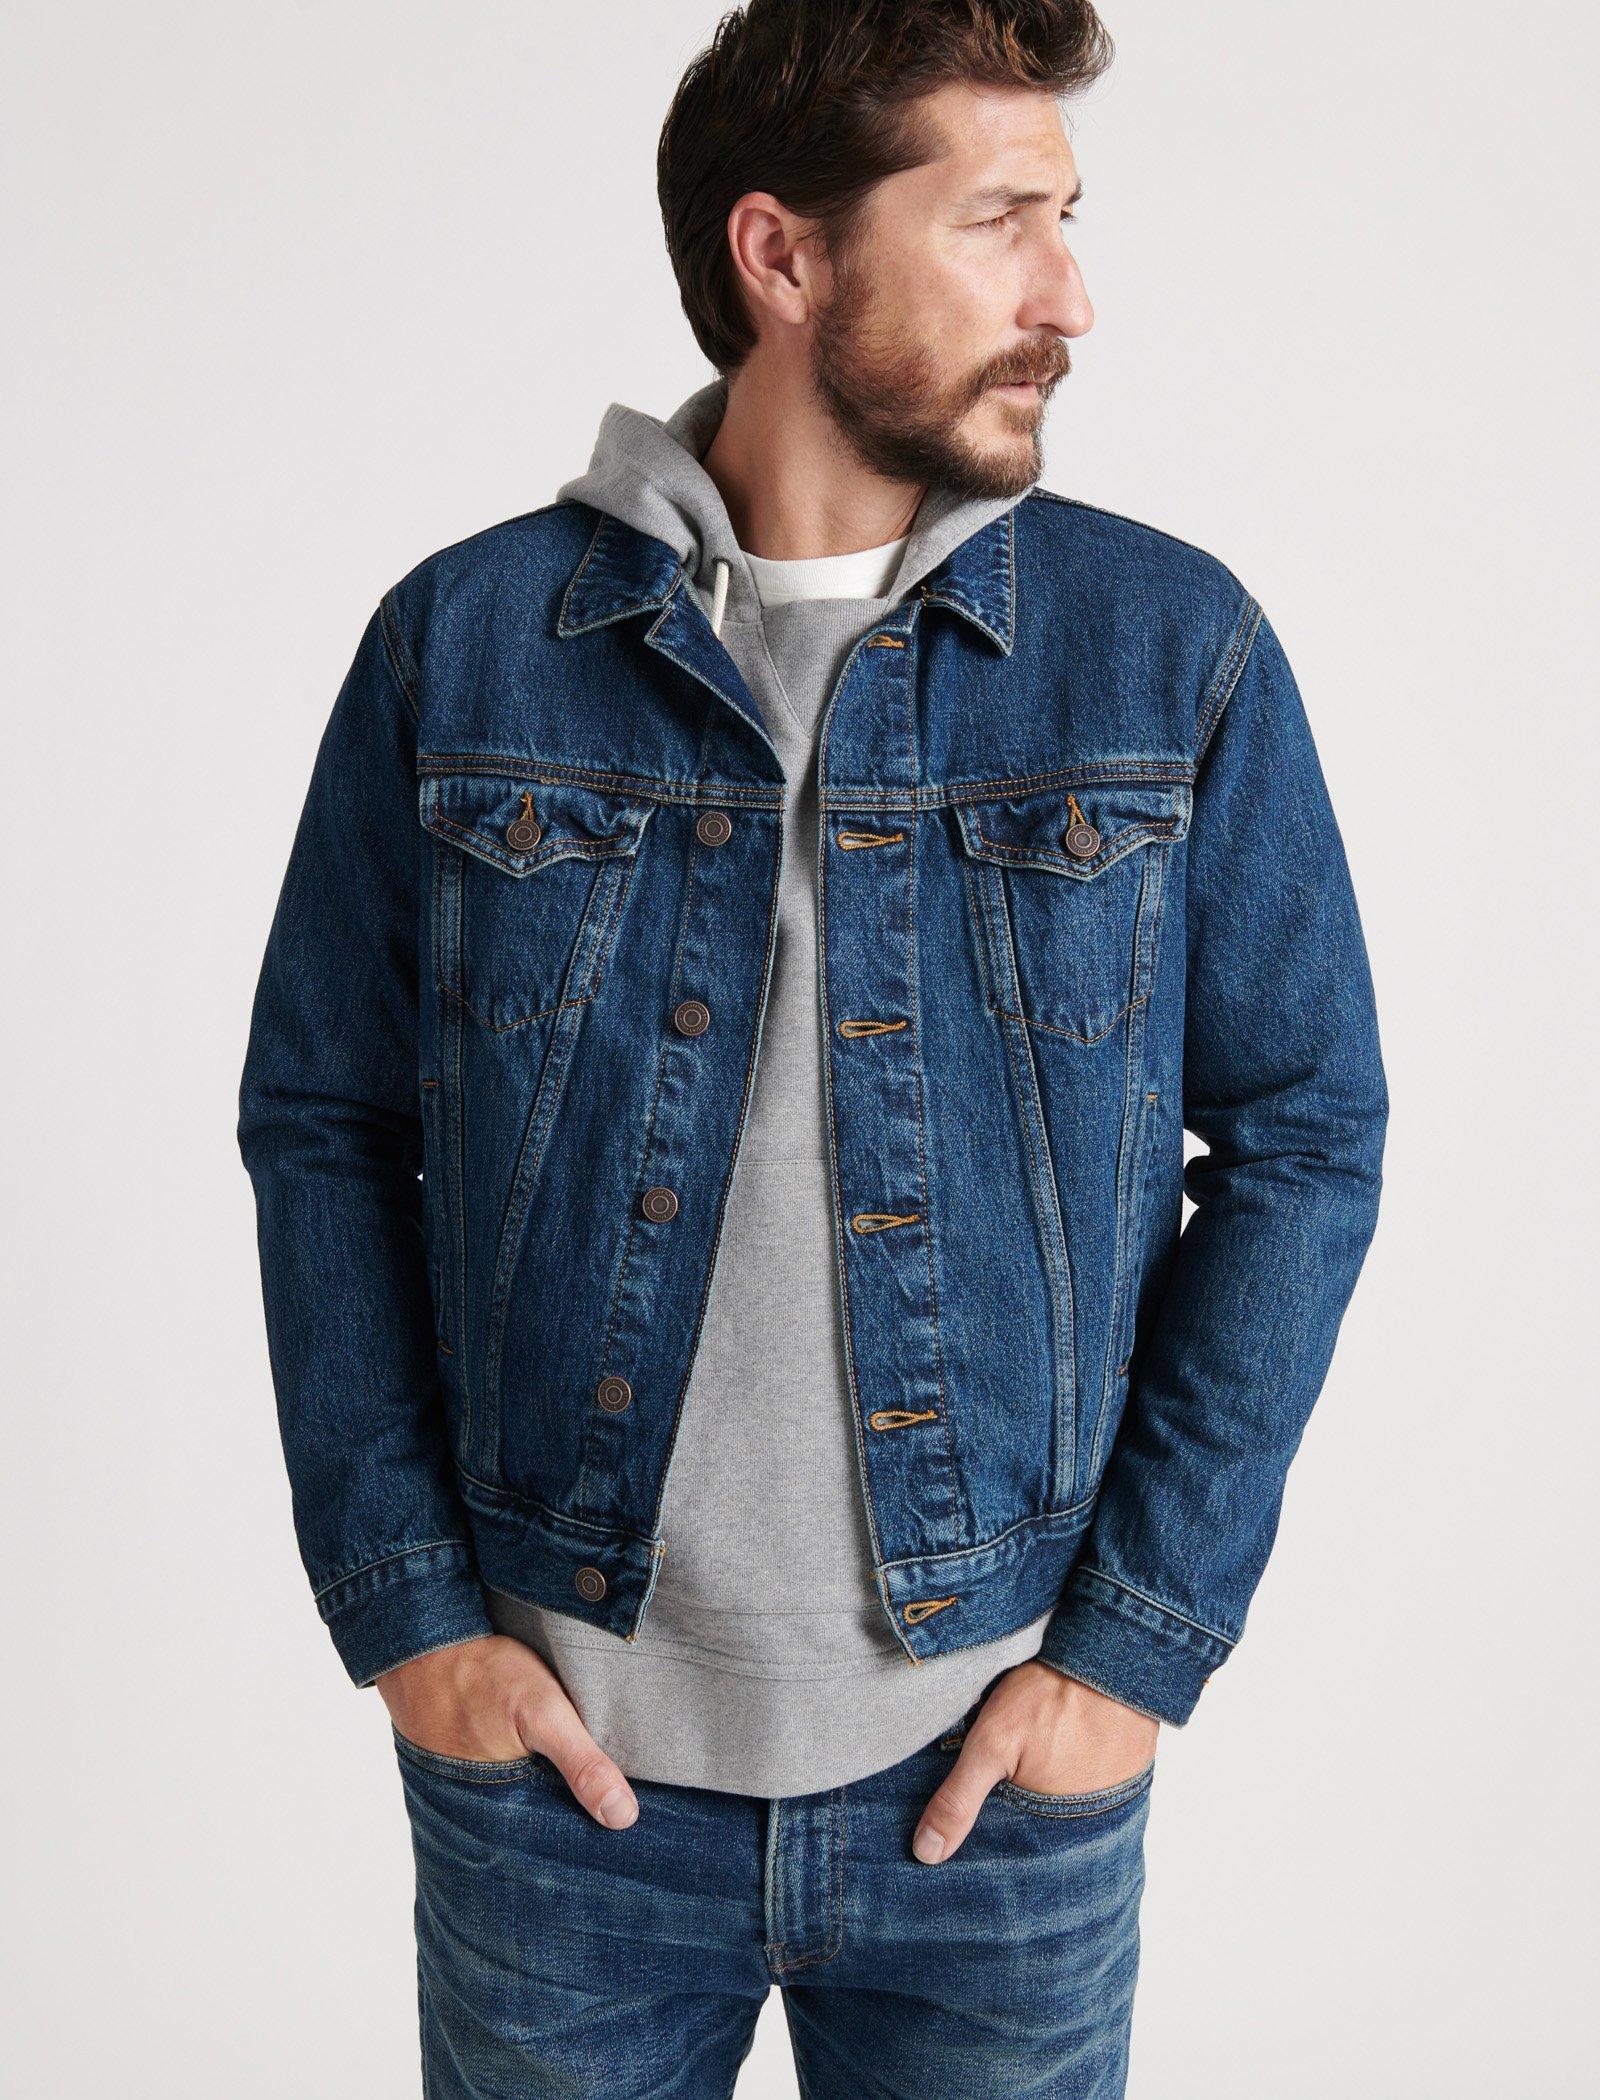 lucky brand jean jacket mens